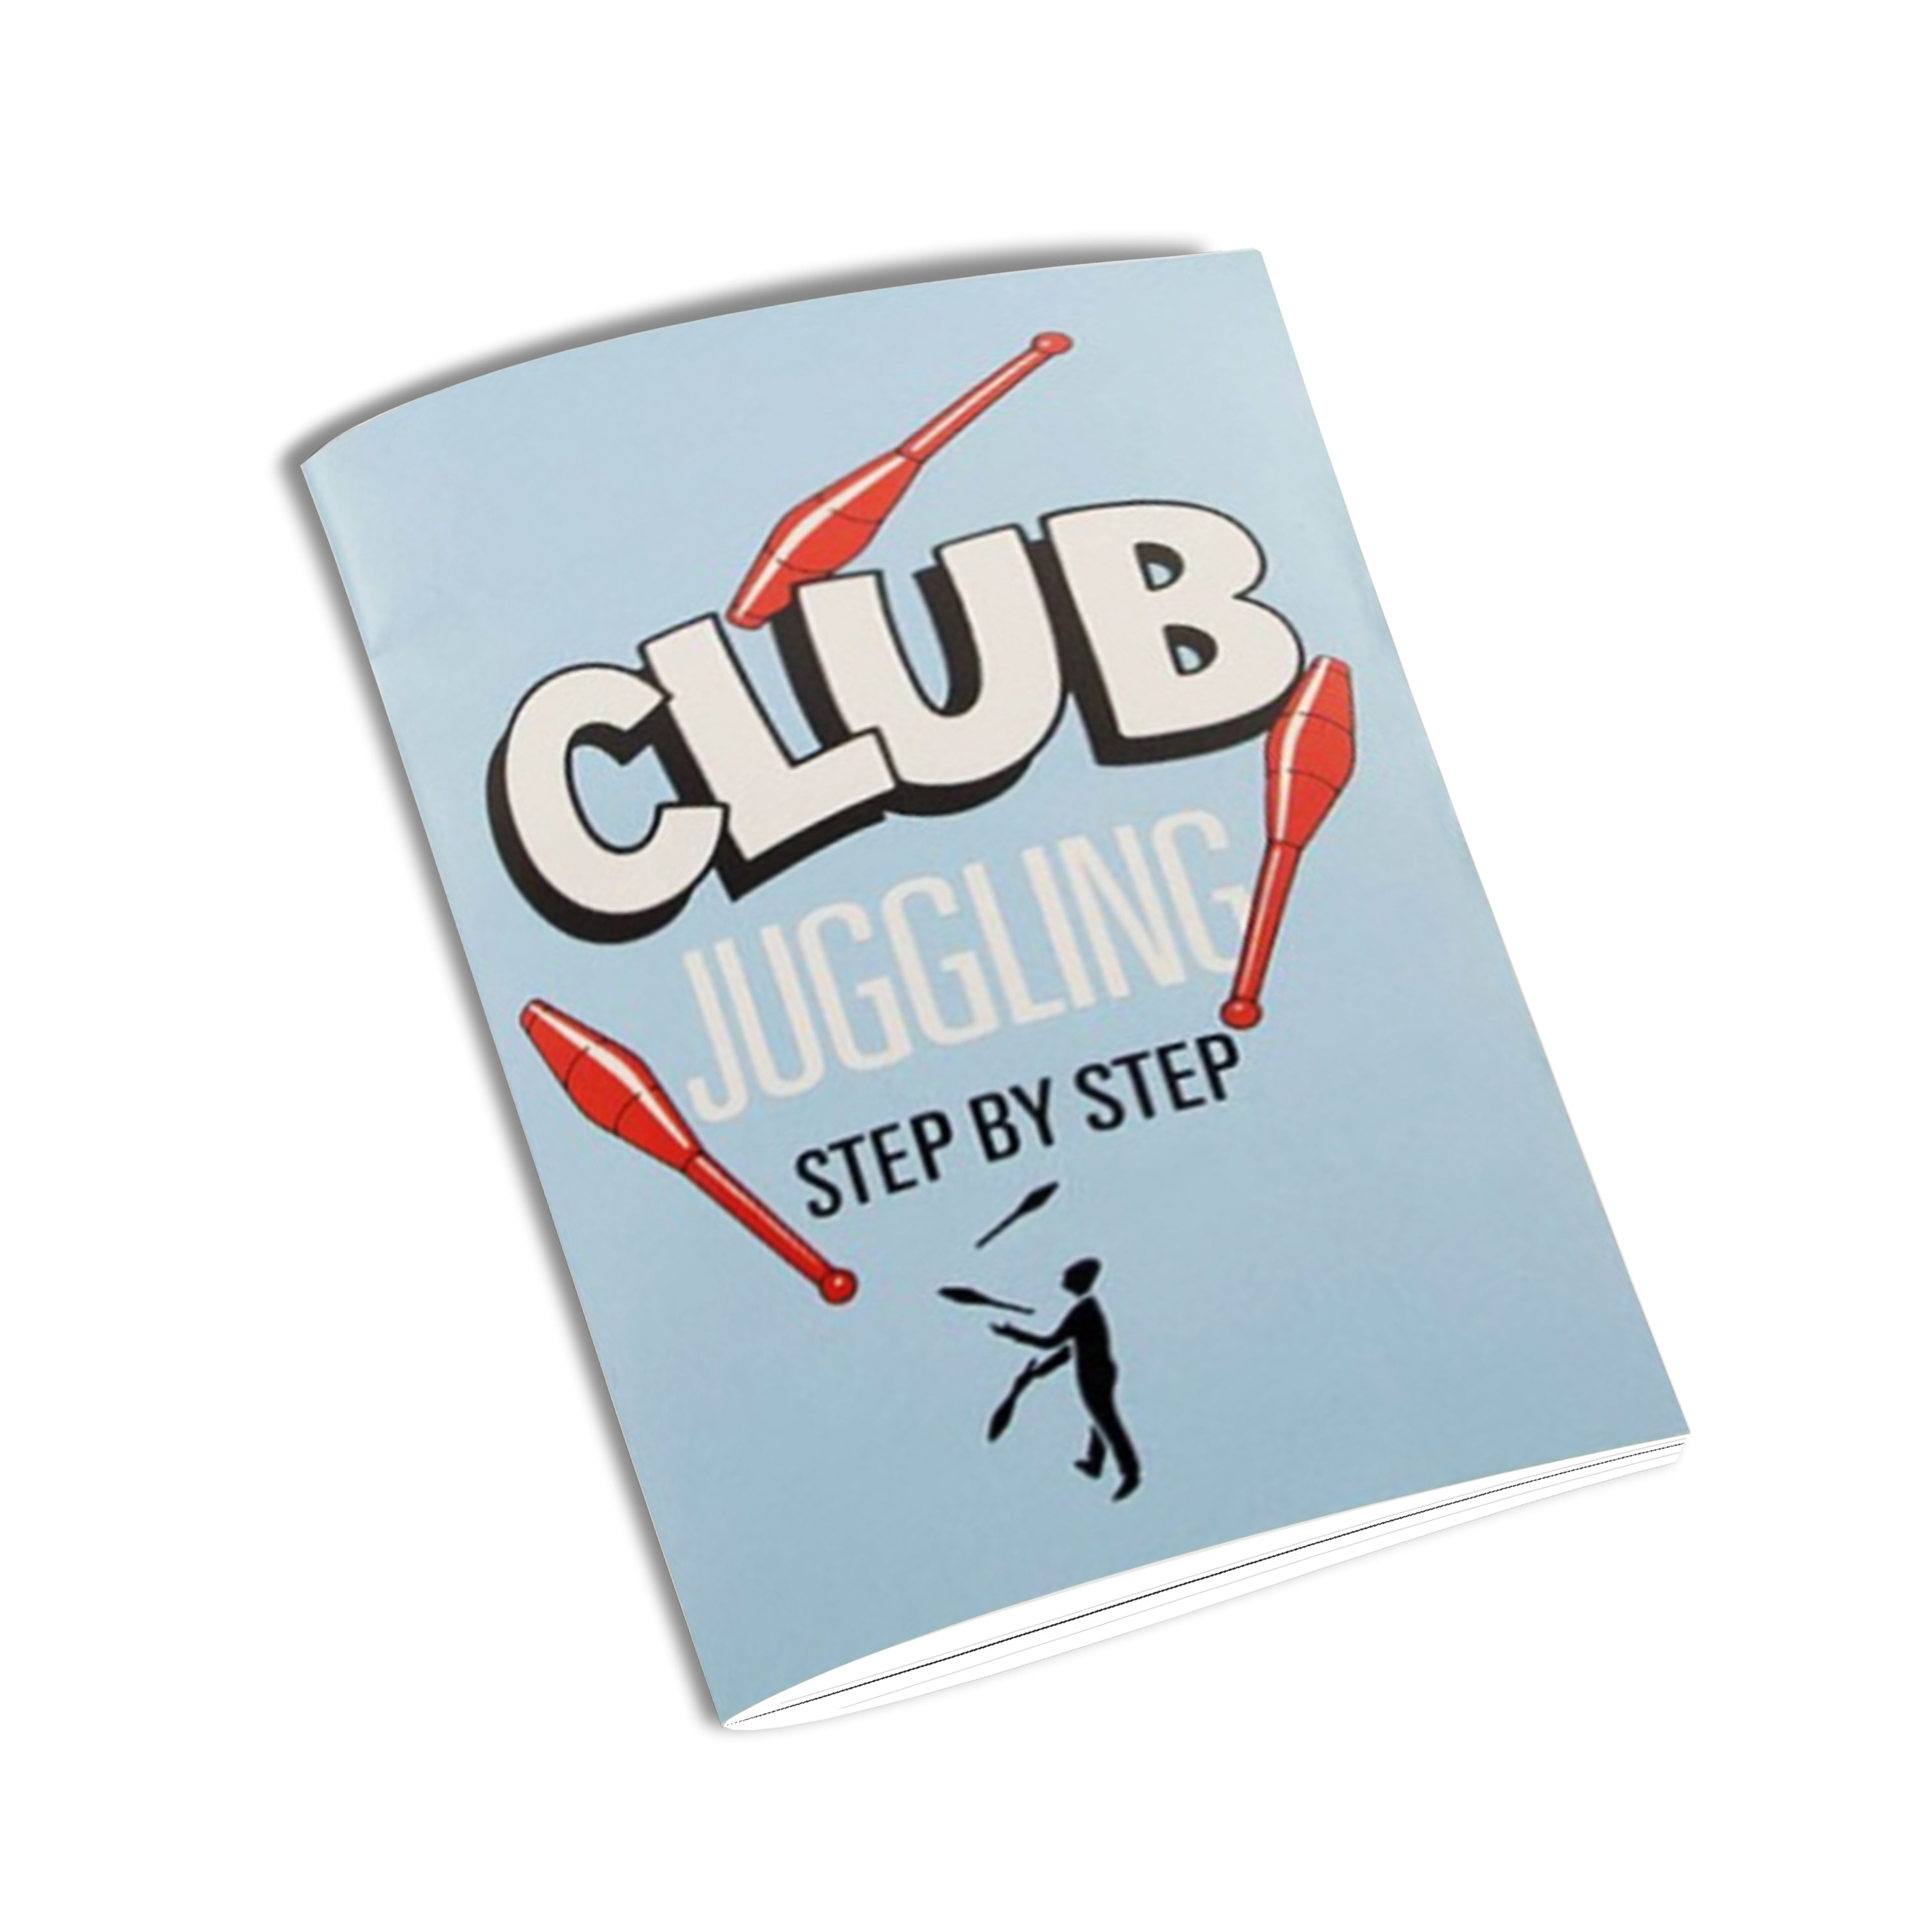 Step By Step Club Juggling (Juggling Book)